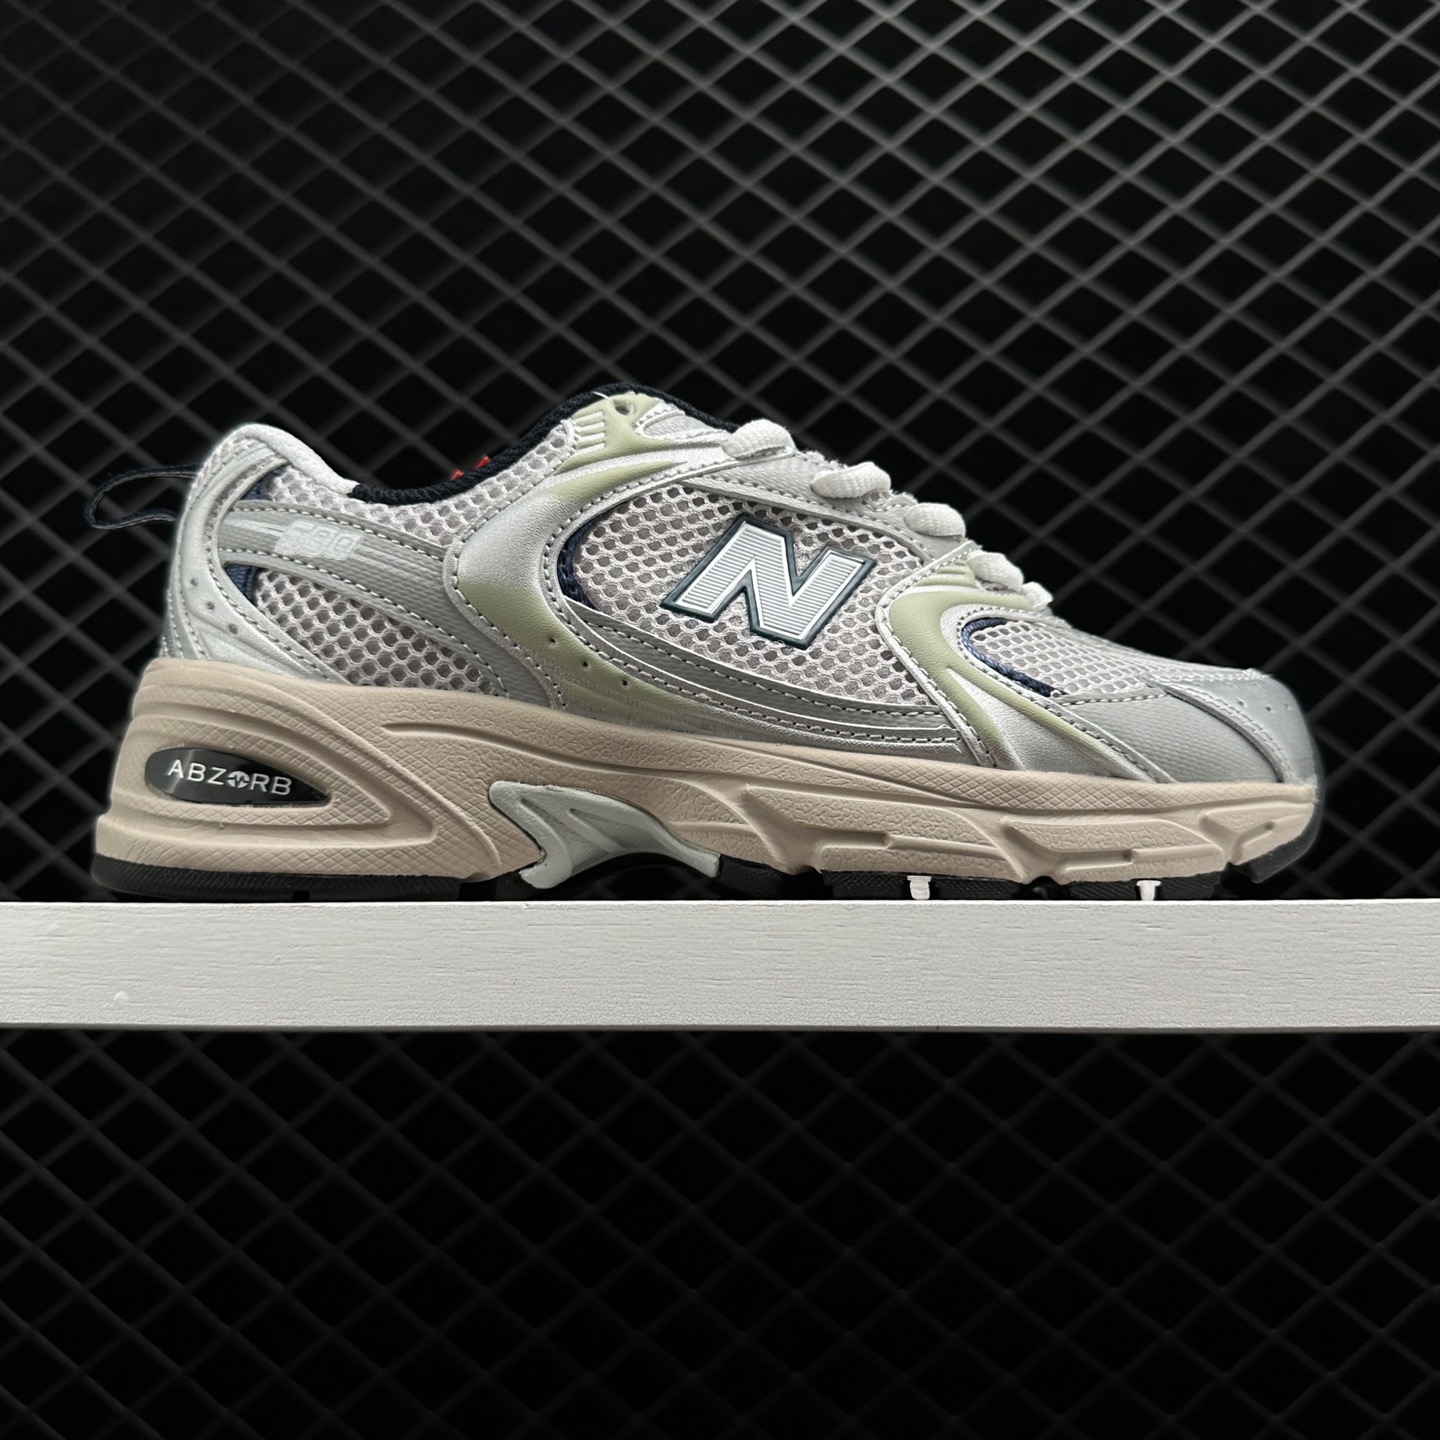 New Balance 530 Silver Khaki: Stylish and Comfortable Sneakers